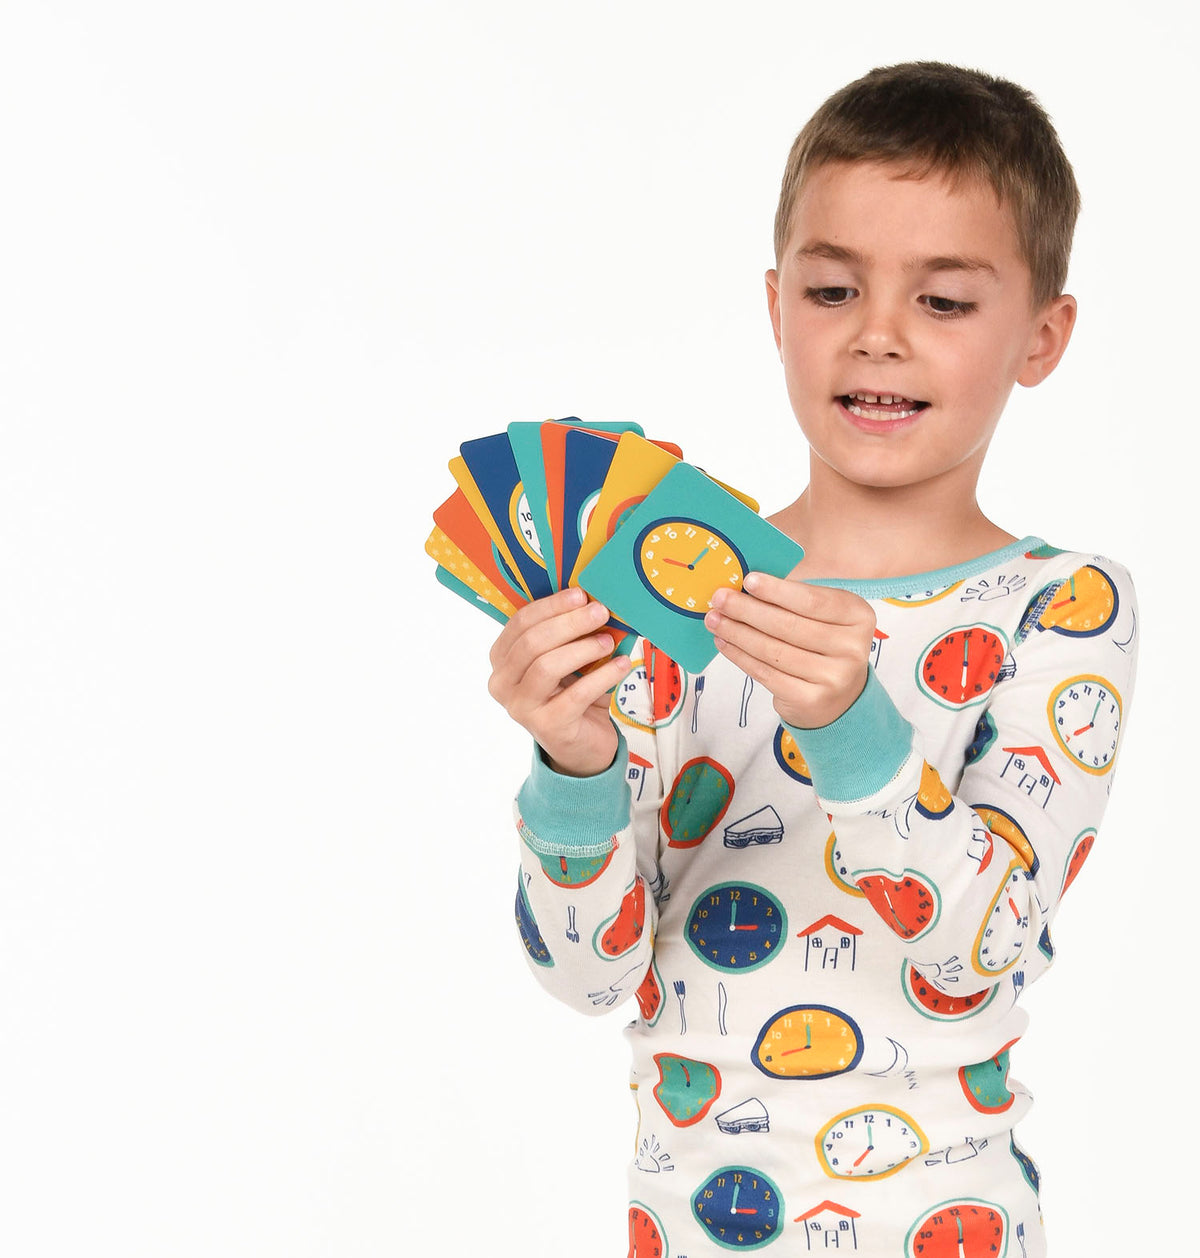 Smart Dreams - Clock pajamas and cards